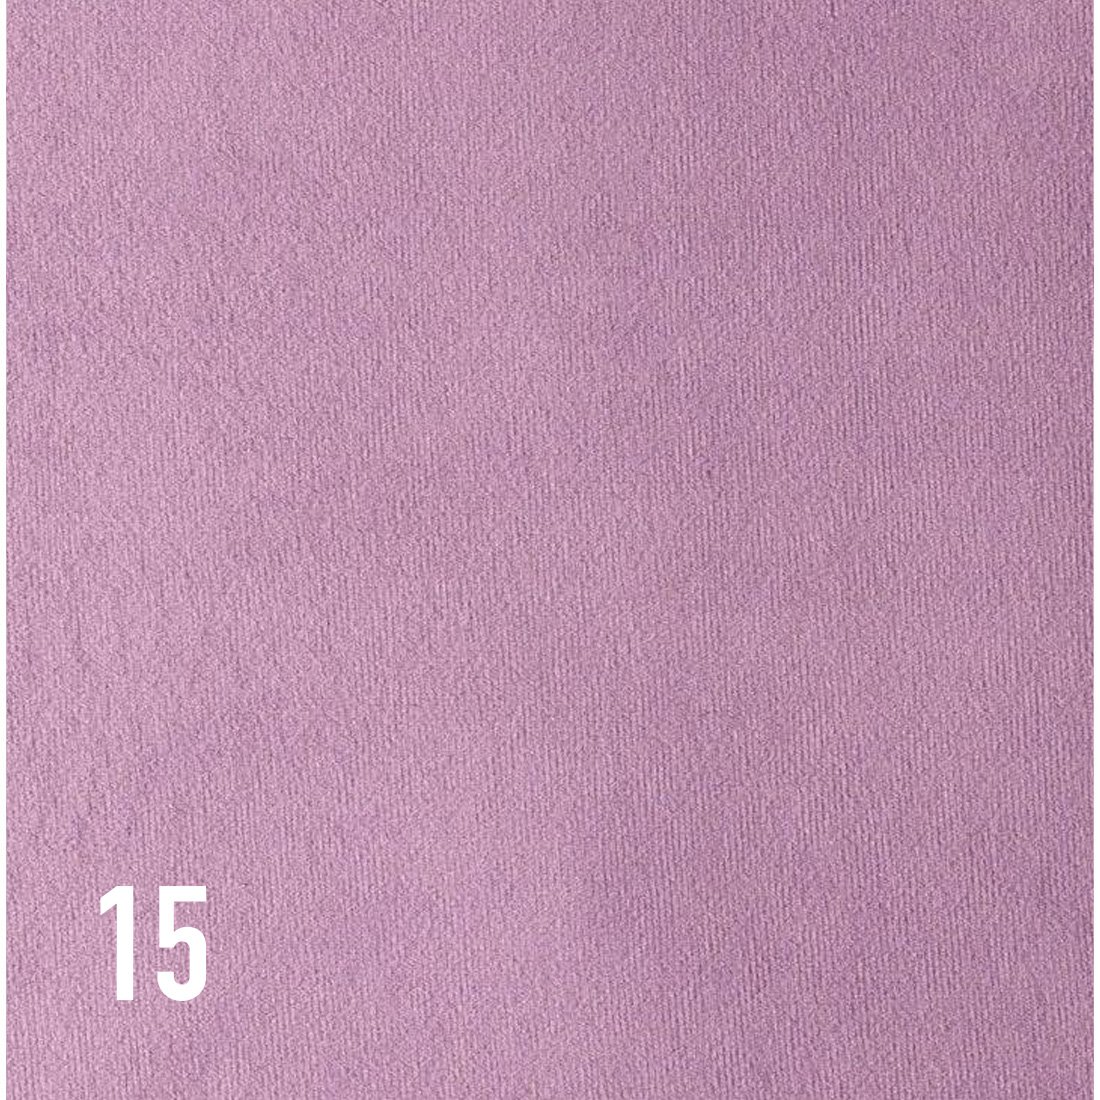 15 violet.jpg